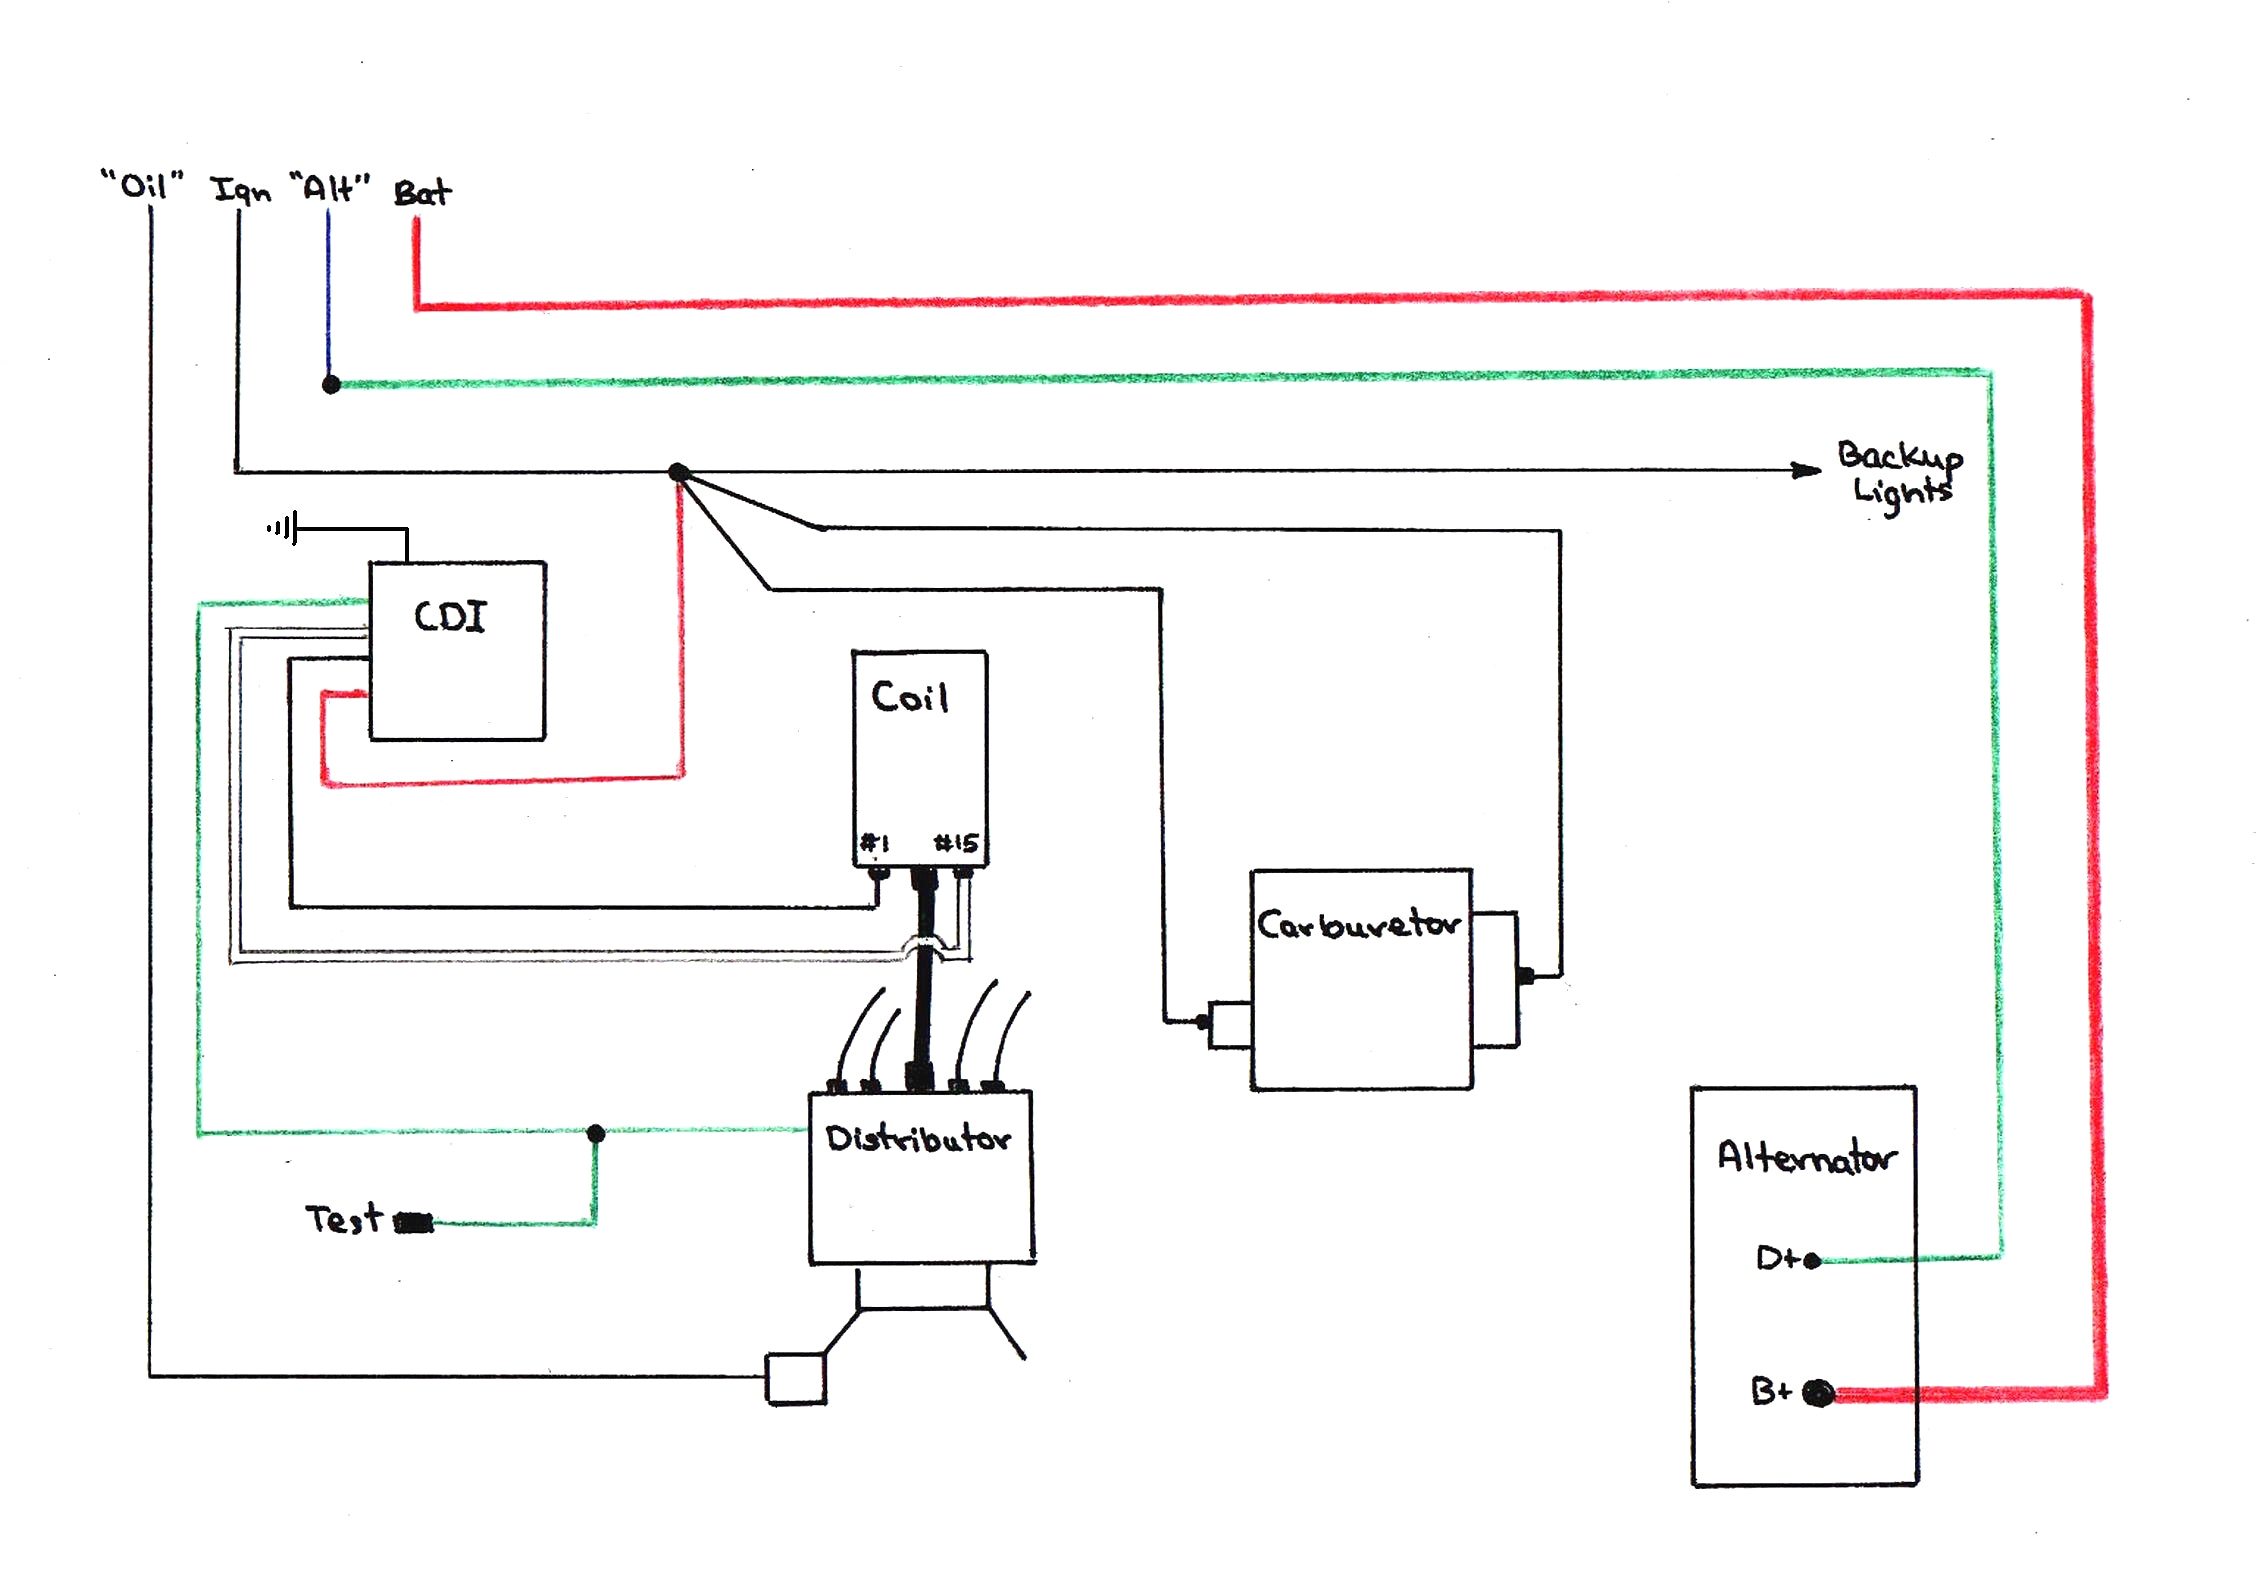 dc 5 wire cdi diagram wiring diagram datasourcewrg 0526 gy6 racing cdi wiring diagram dc